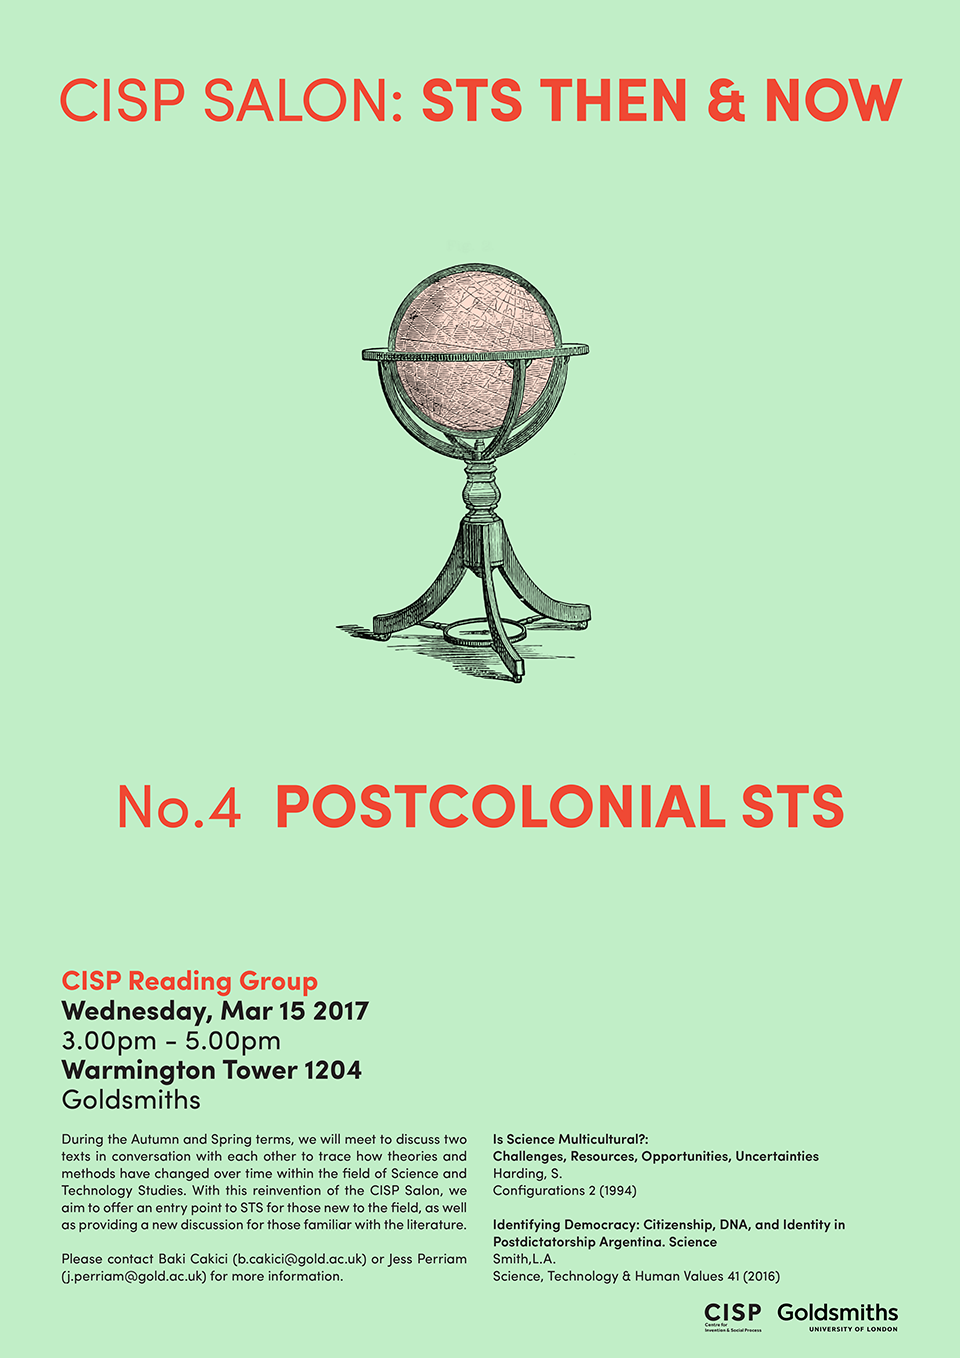 CISP Salon 2016/17: Postcolonial STS